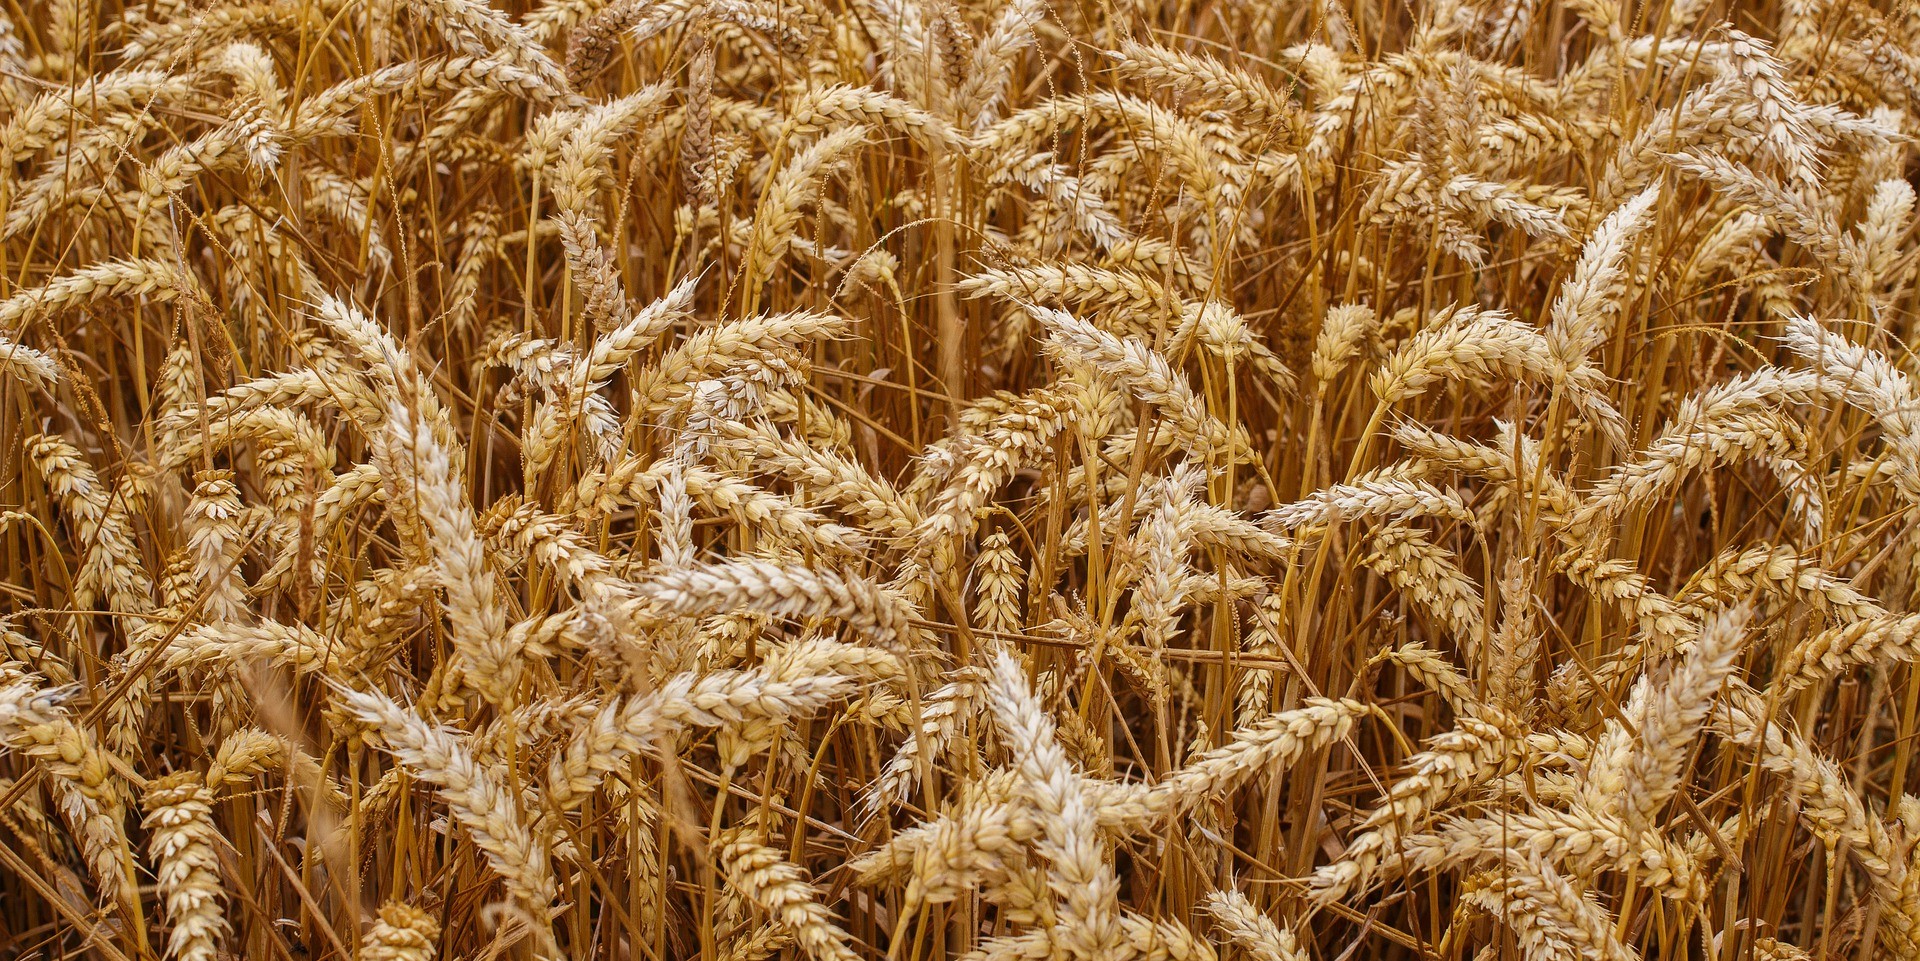 4 Hazards for Grain Handling Facility Operators